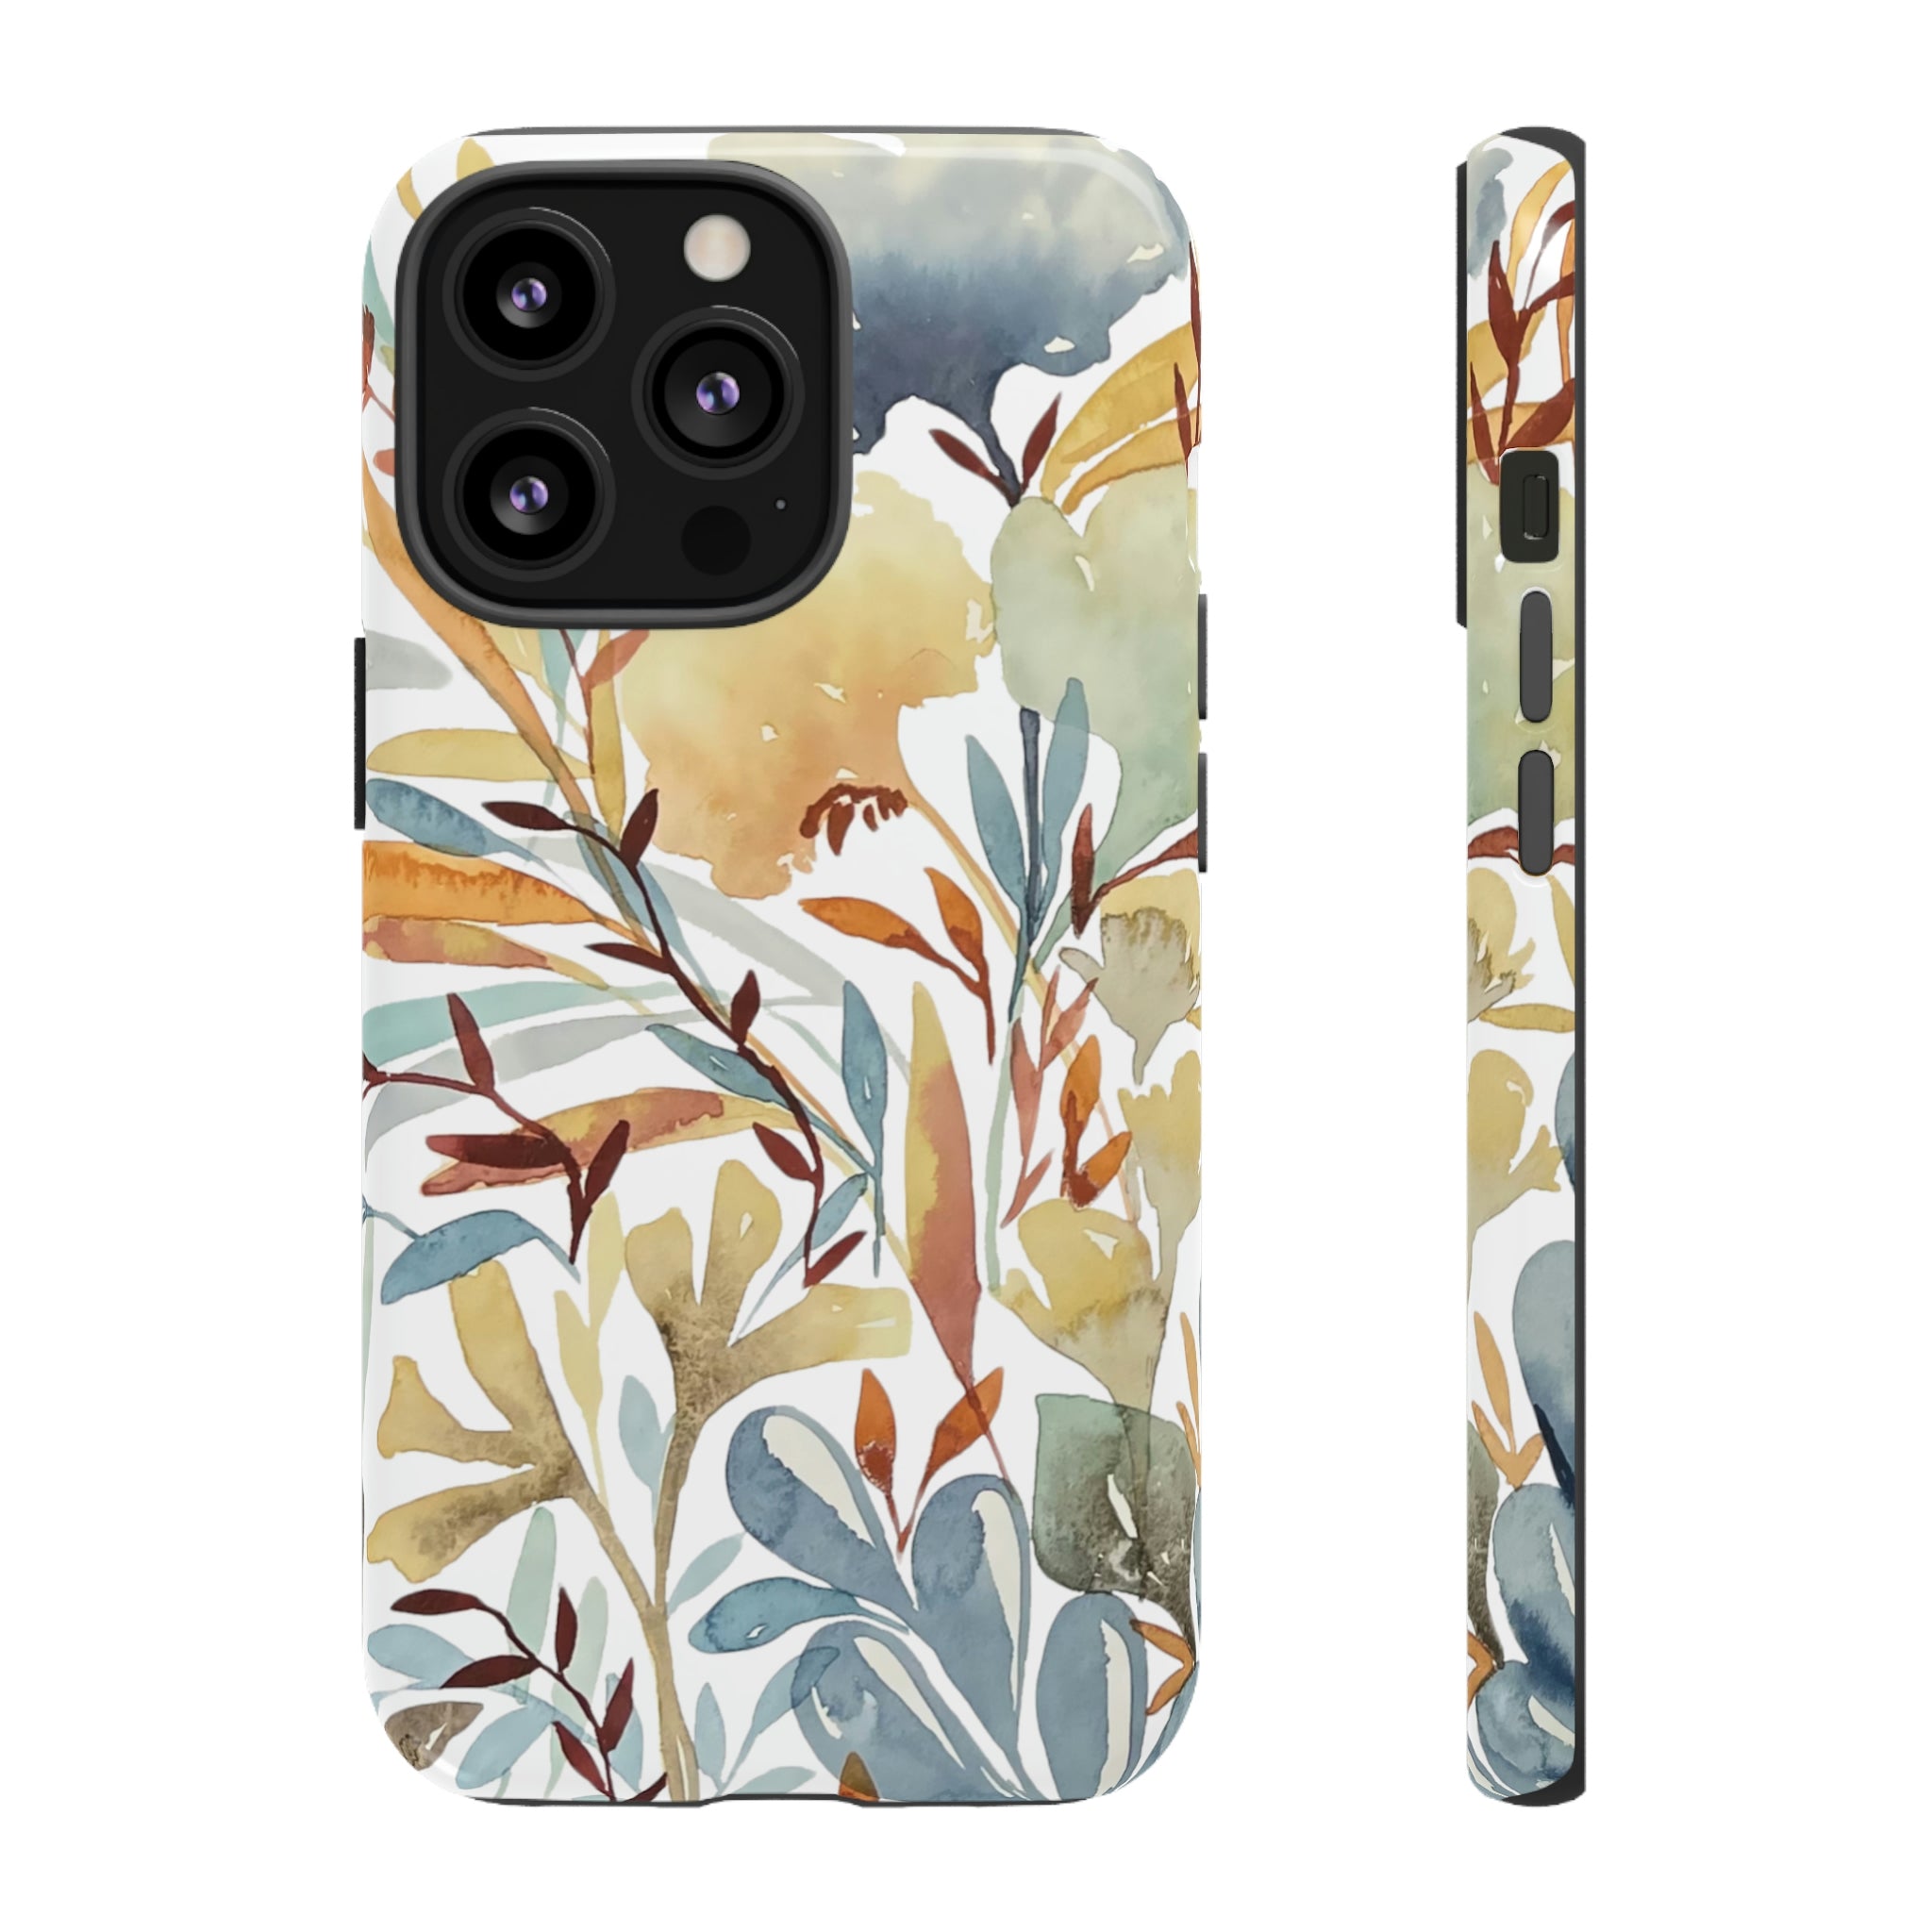 Autumn Garden Botanical Print on Cell Phone Cases | Apple iPhone, Samsung Galaxy, Google Pixel